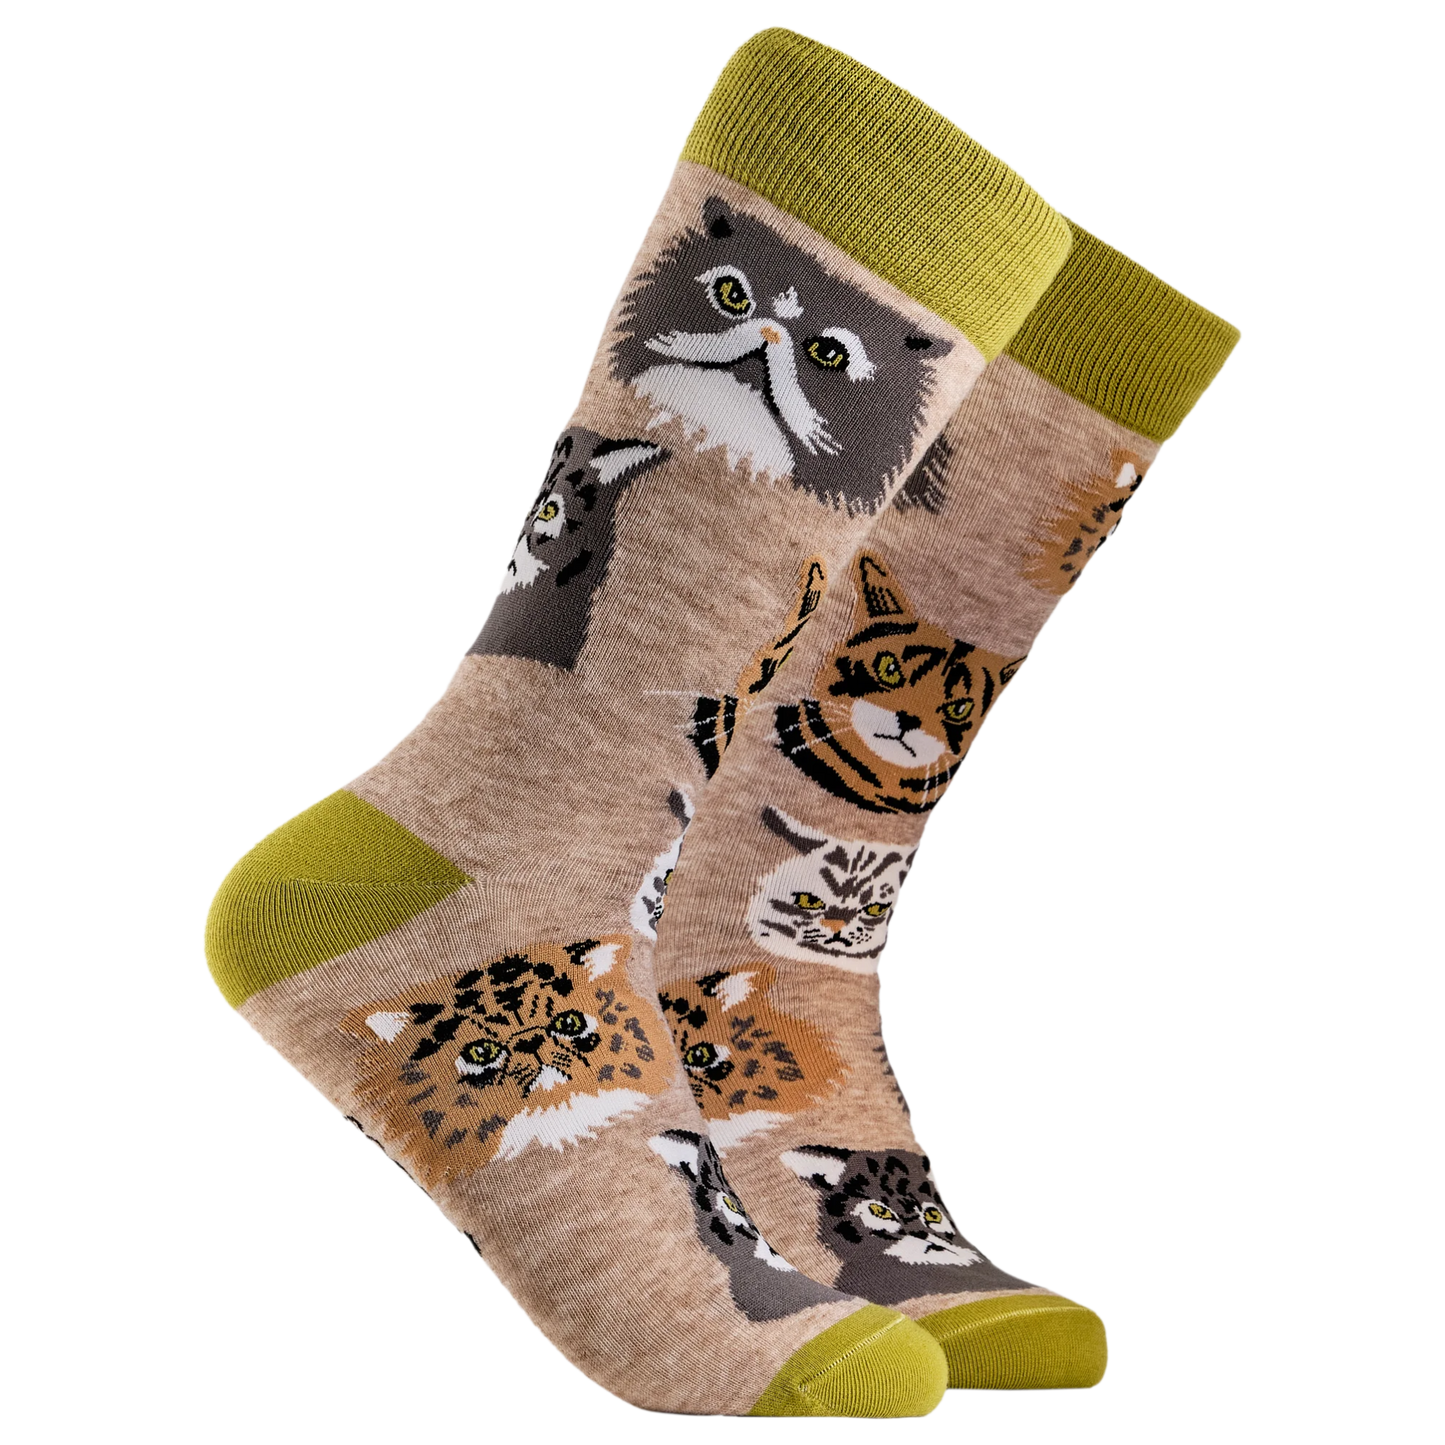 Grumpy Cats Socks. A pair of socks depicting various grumpy cats. Light brown legs, green cuff, heel and toe.